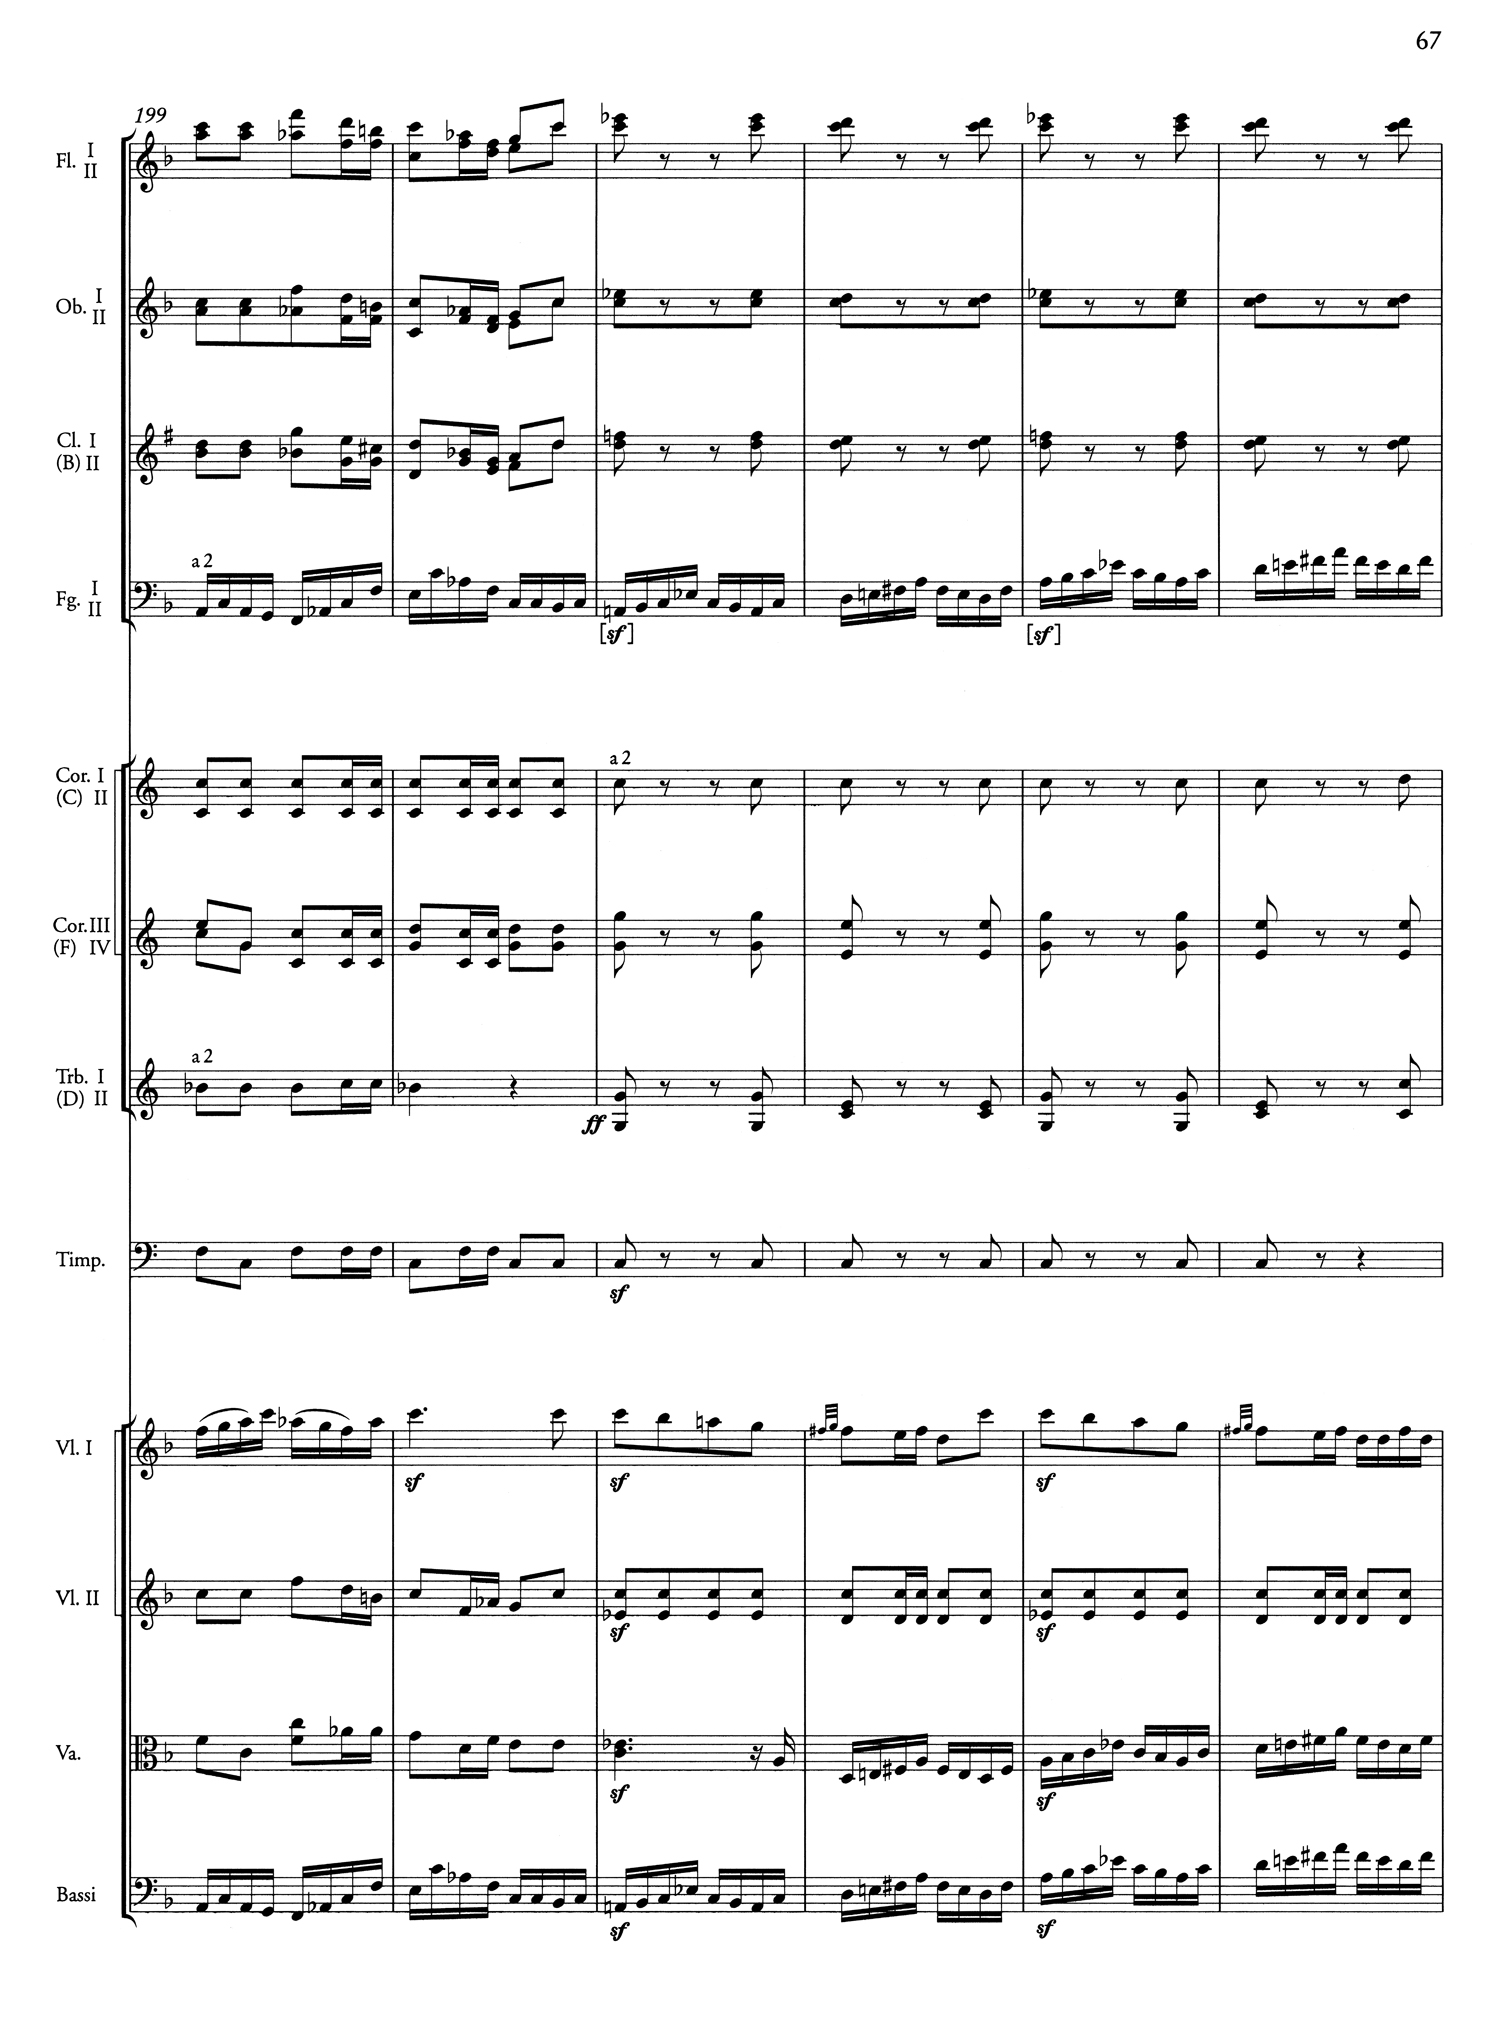 Mendelssohn Score 2 Page 3.jpg